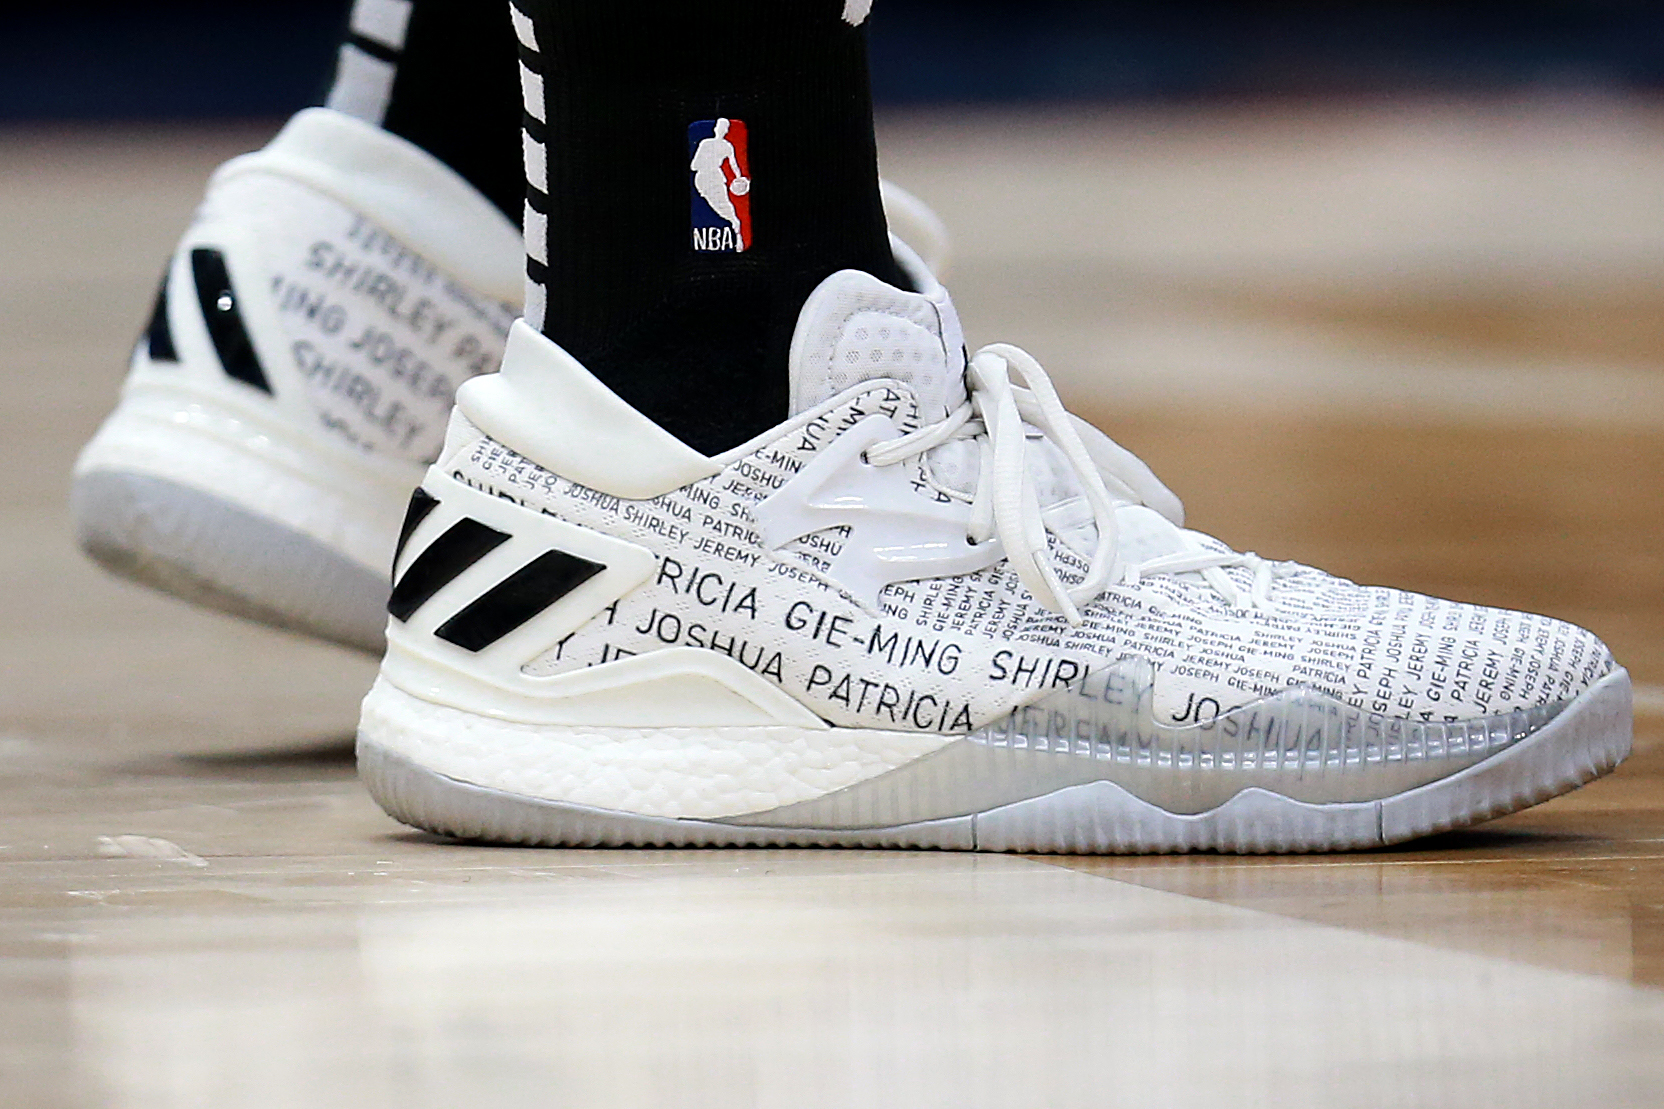 Adidas’ basketball shoe business had a stunningly strong quarter